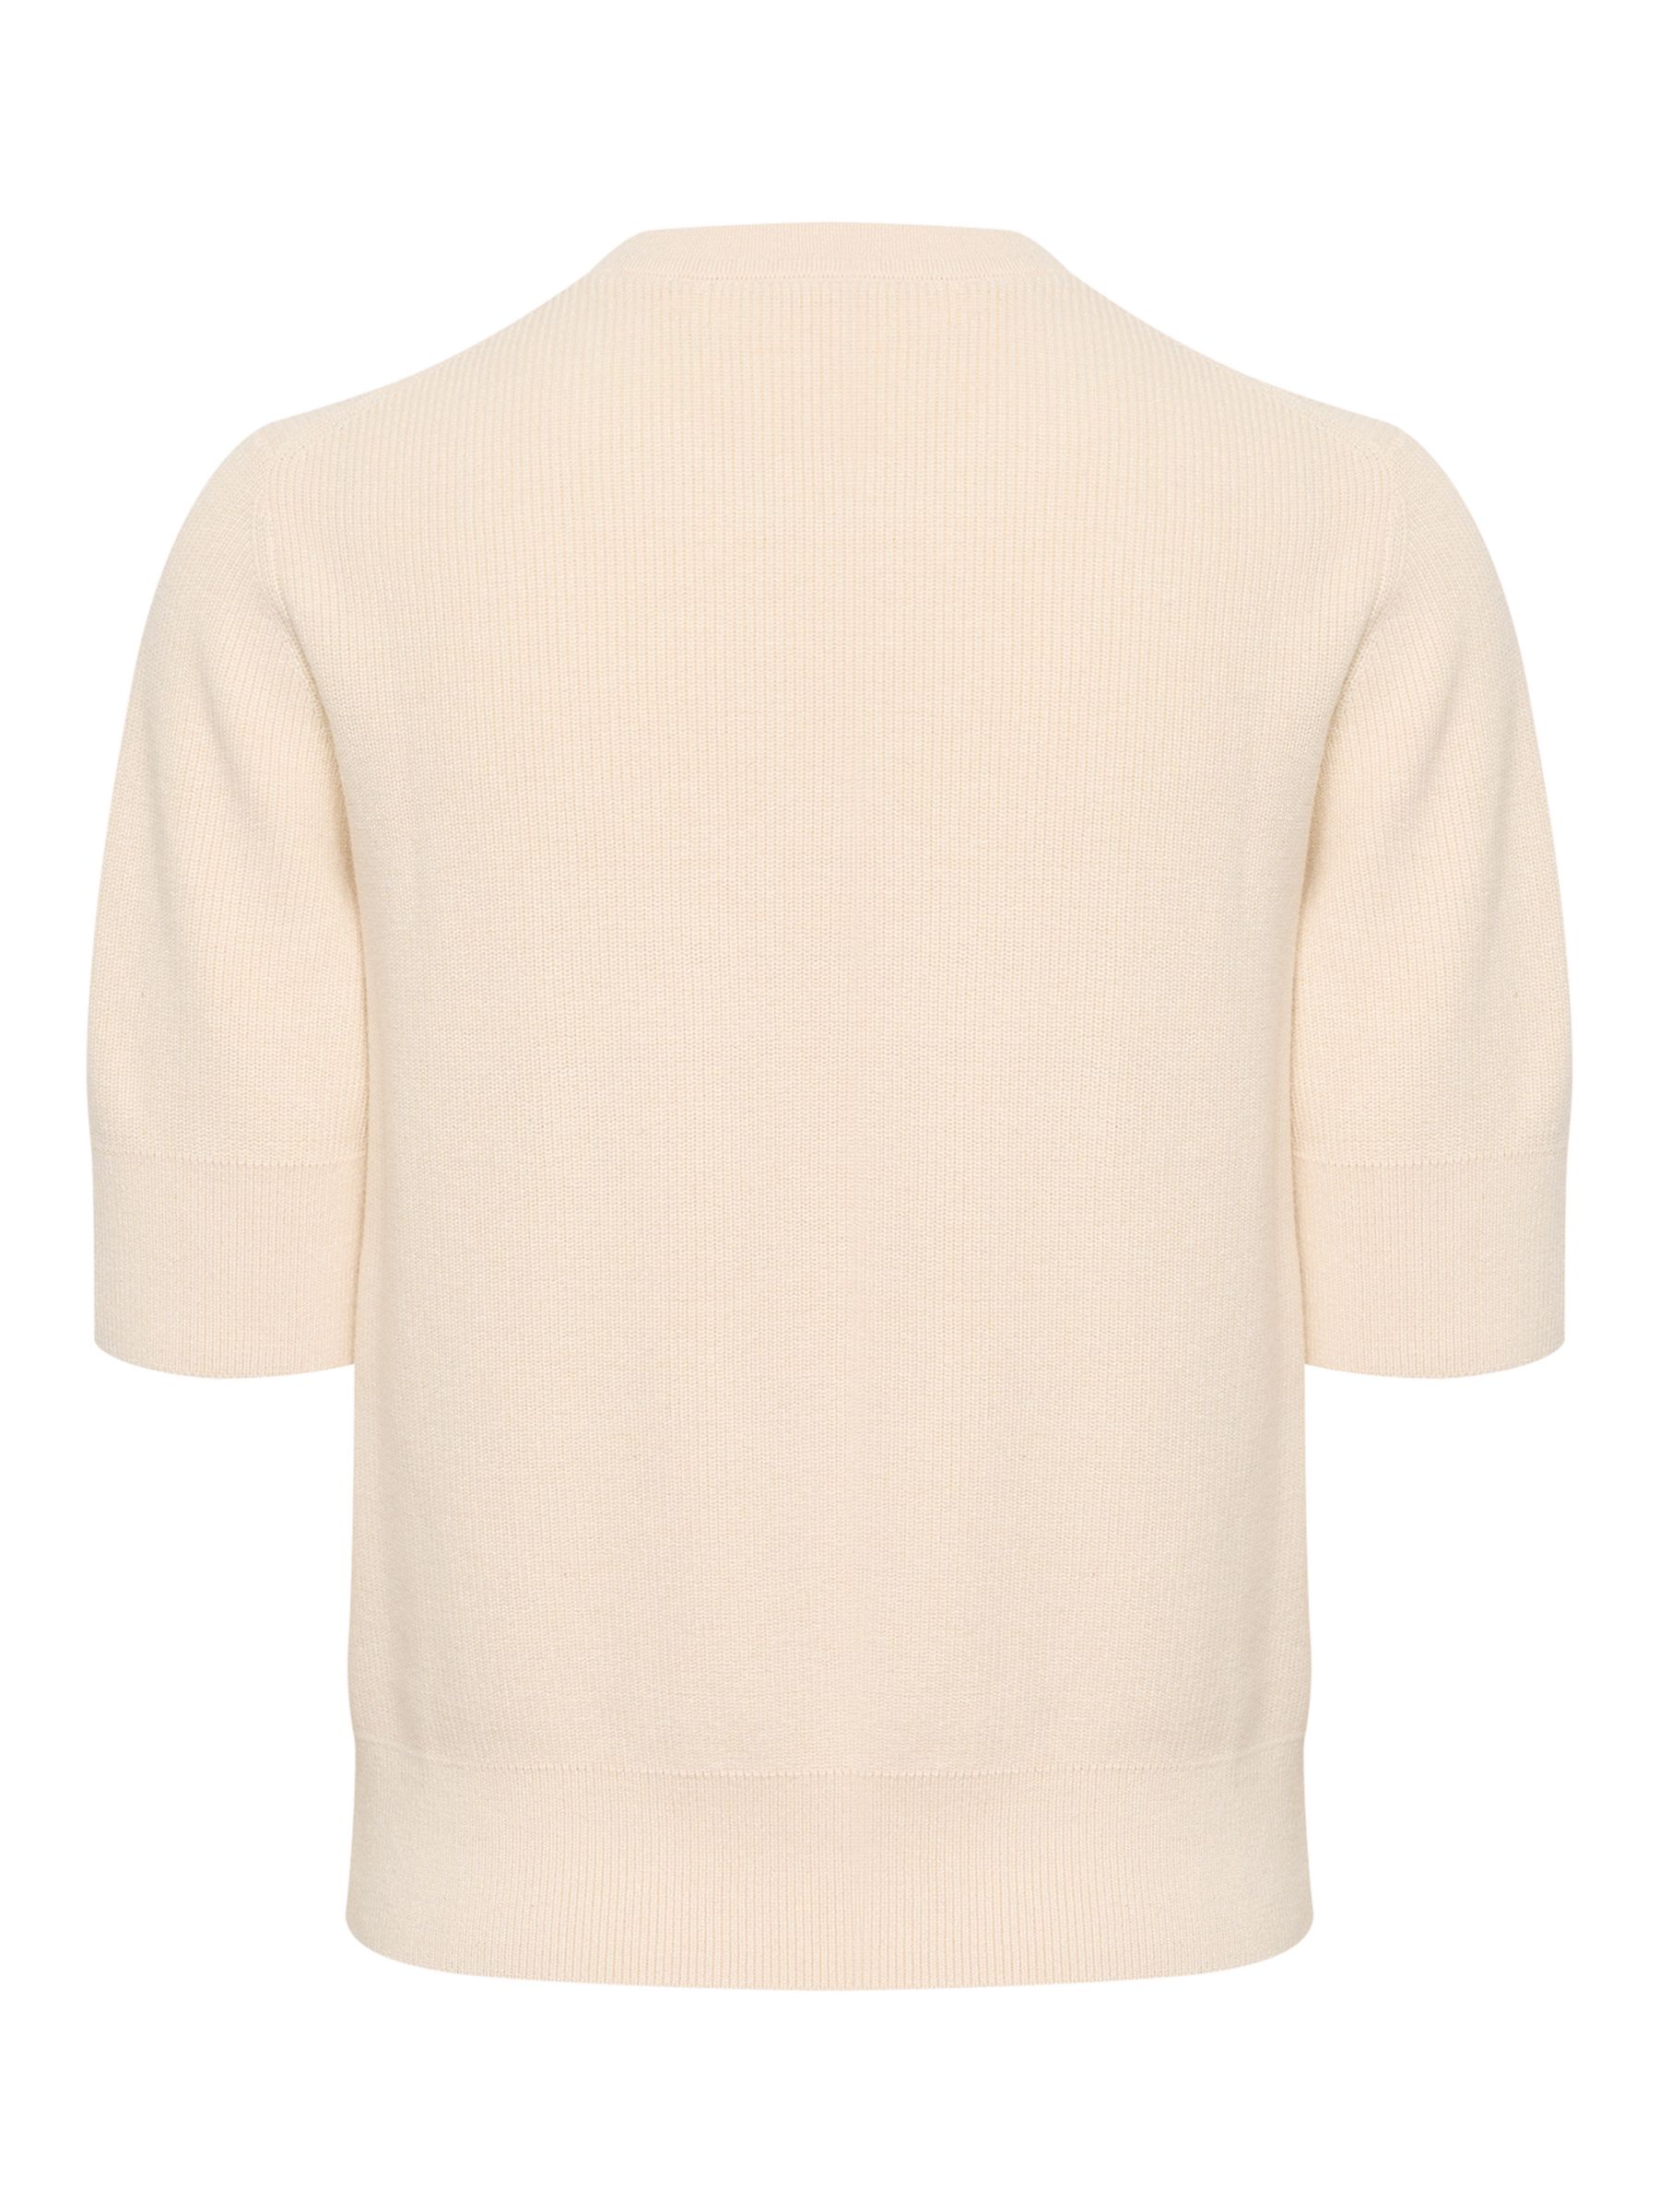 Buy InWear Melas Short Sleeve Classic Fit T-shirt, Vanilla Online at johnlewis.com